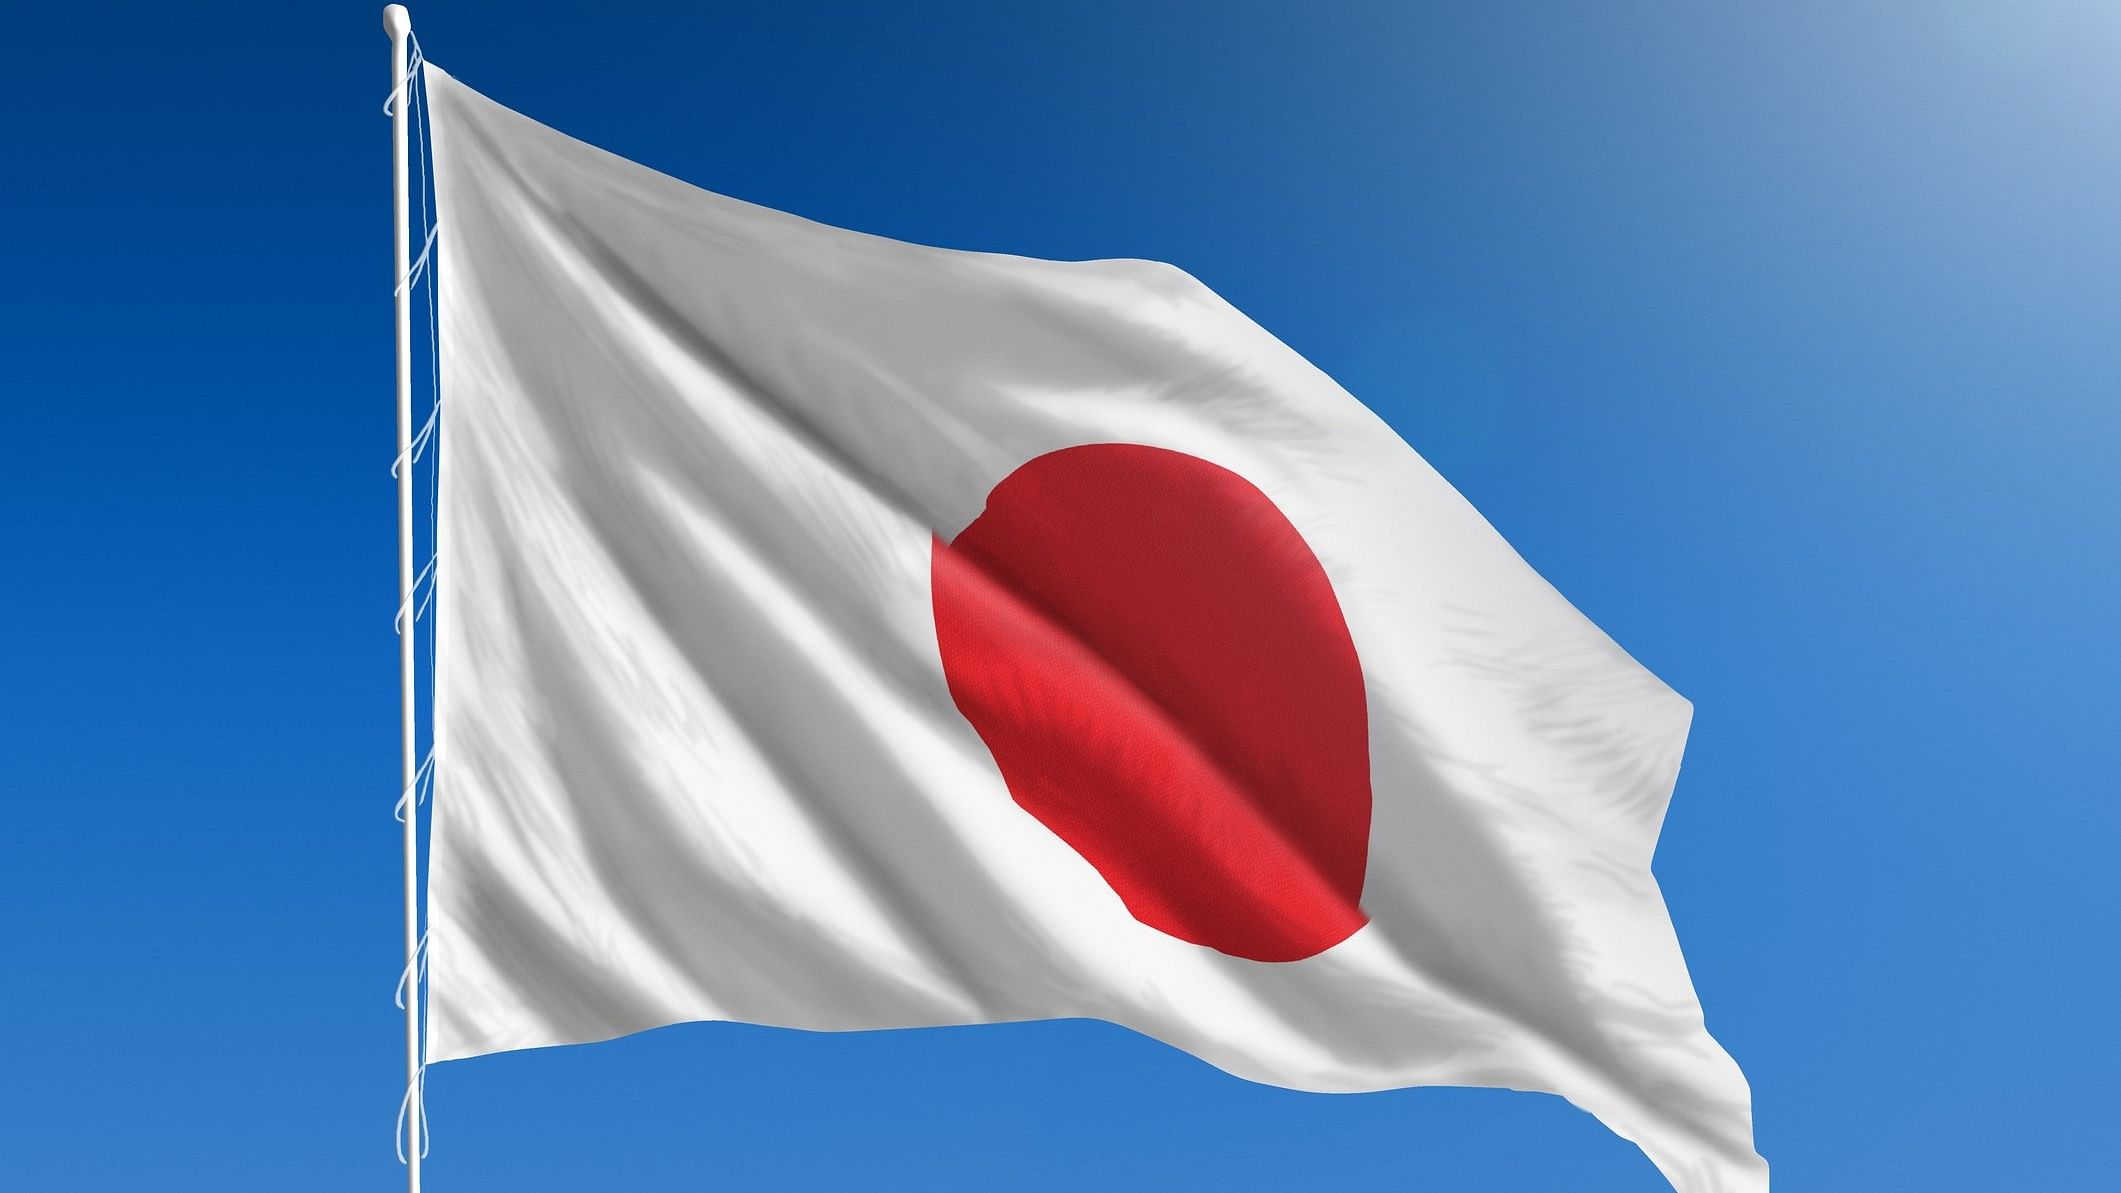 <div class="paragraphs"><p>Representative image showing Japan flag.</p></div>